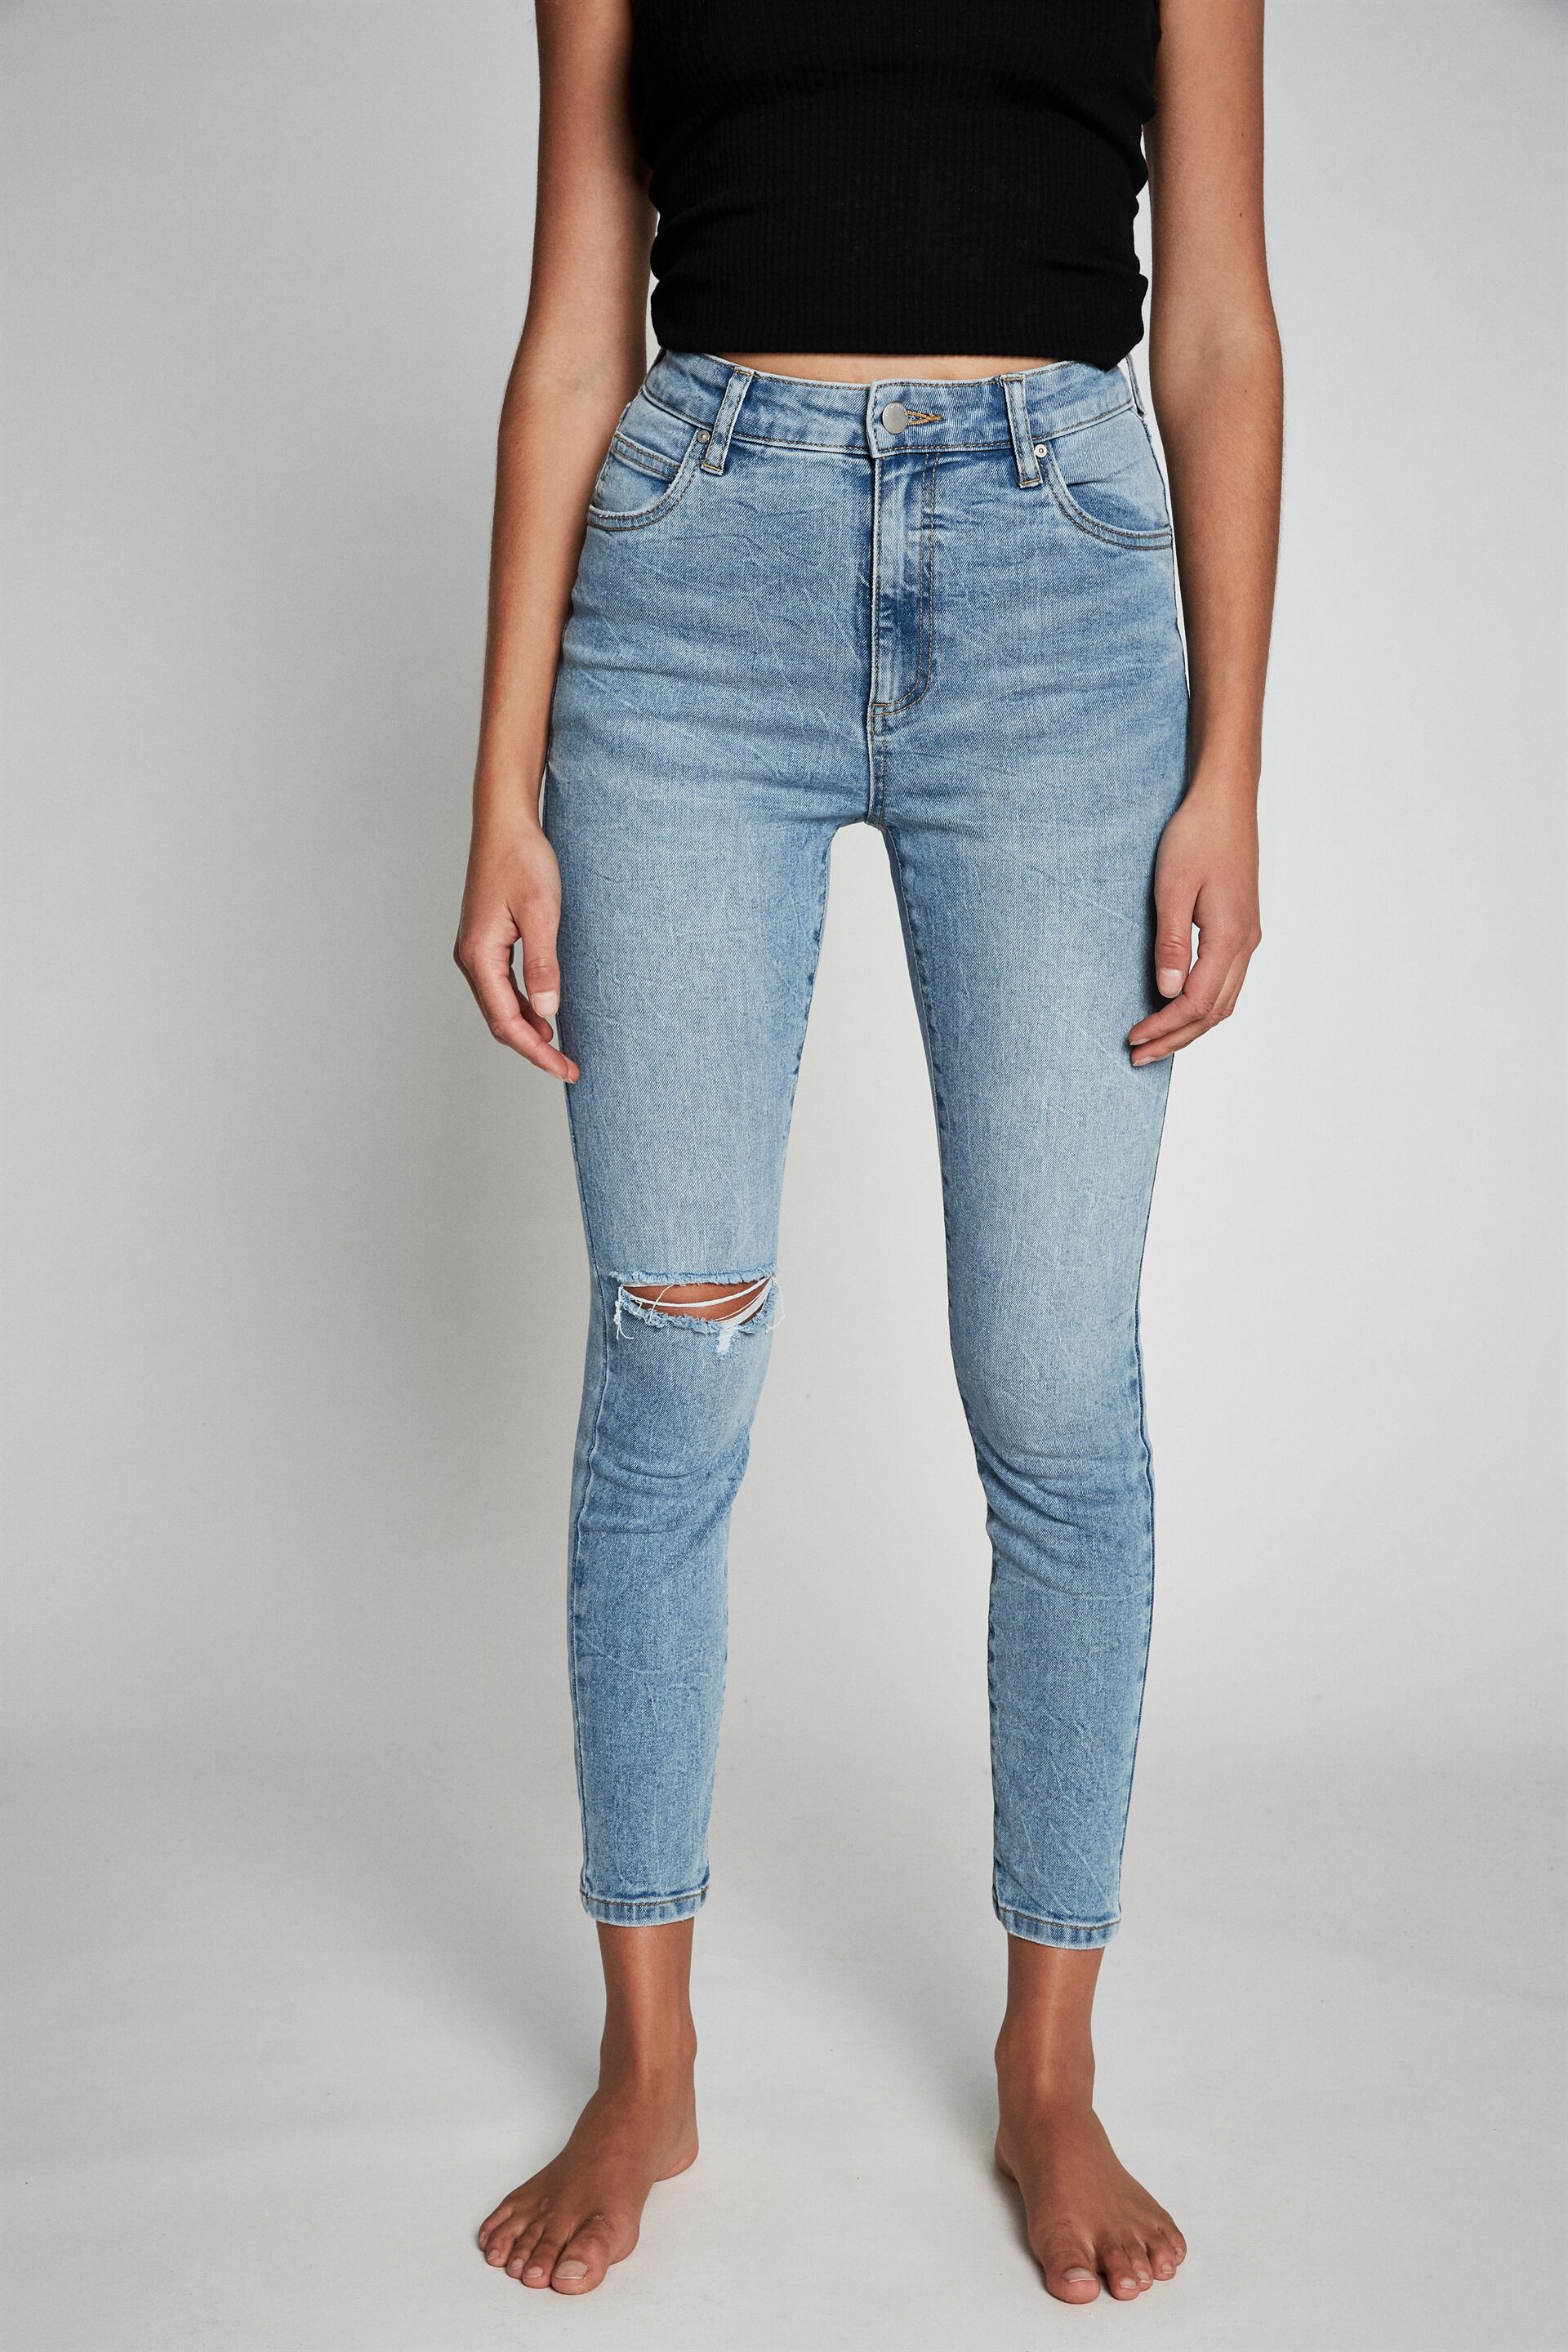 cotton on jeans